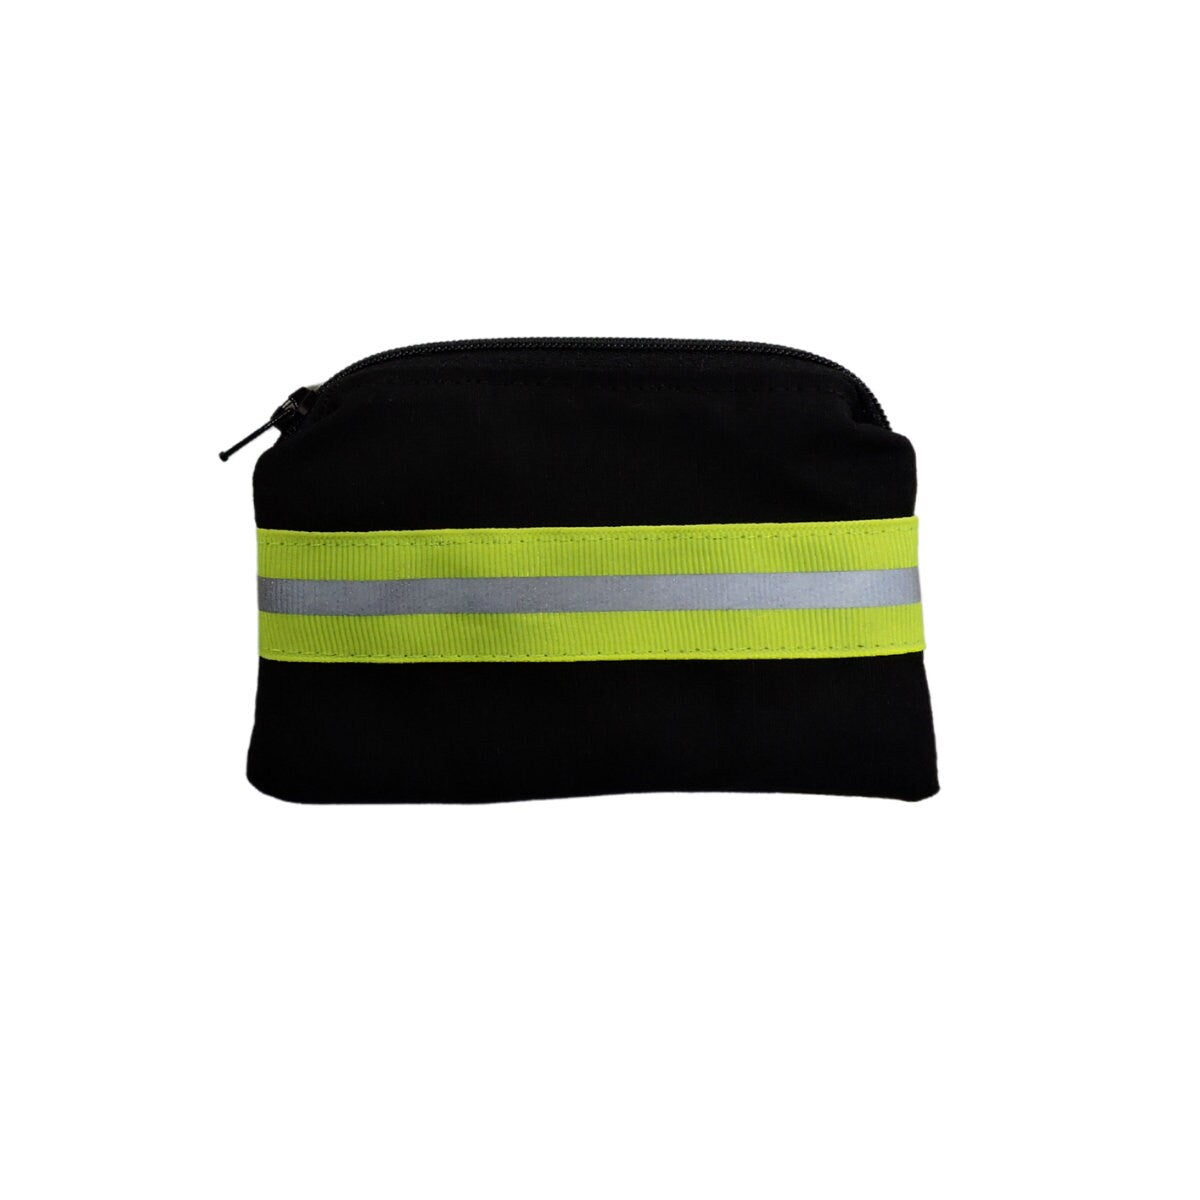 black Firefighter Change purse